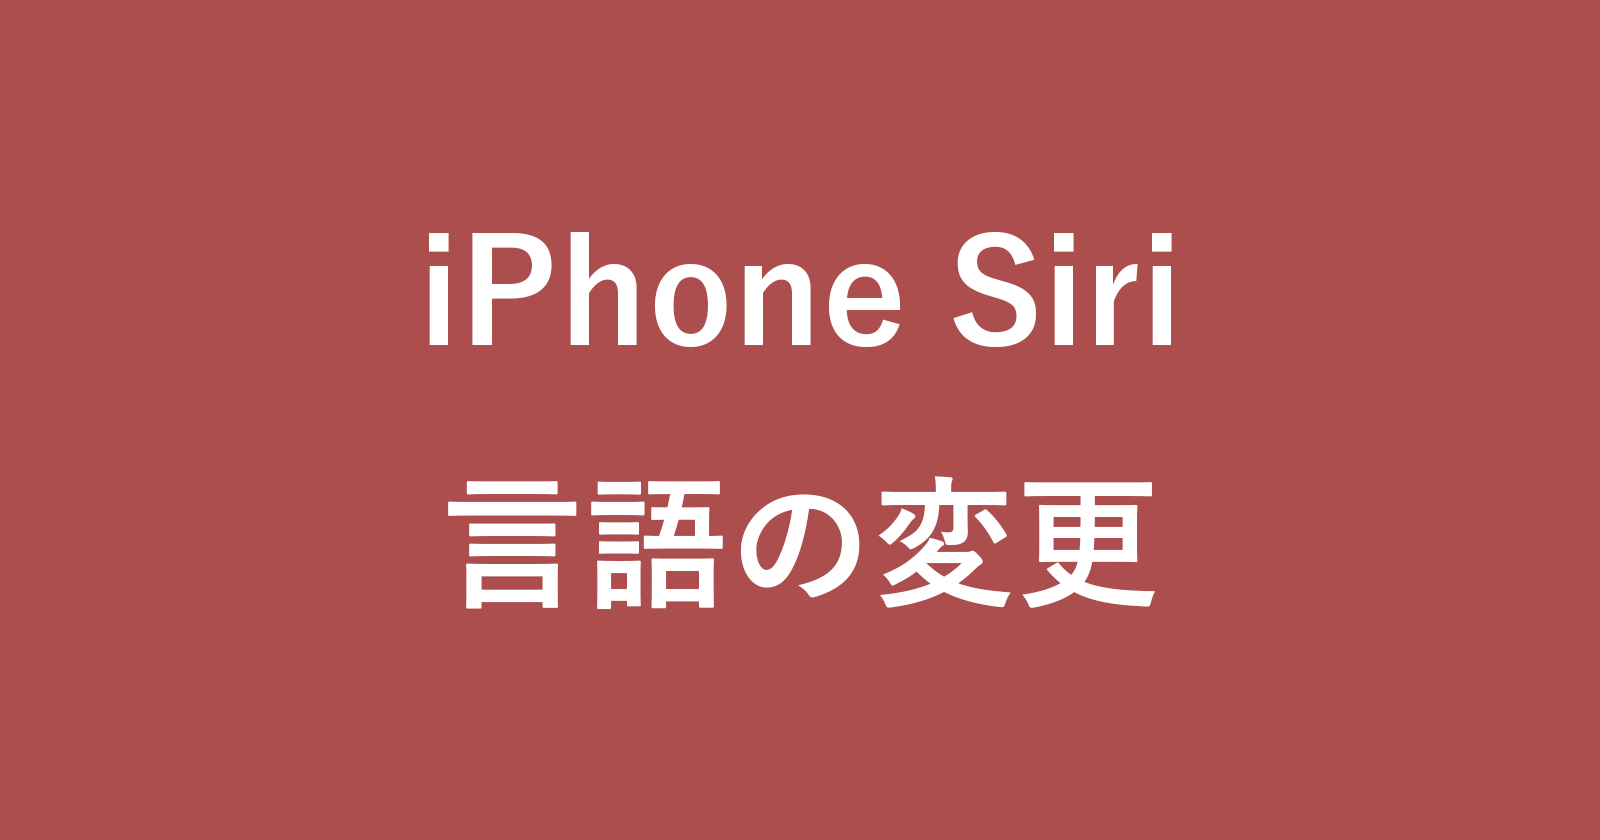 iphone siri language